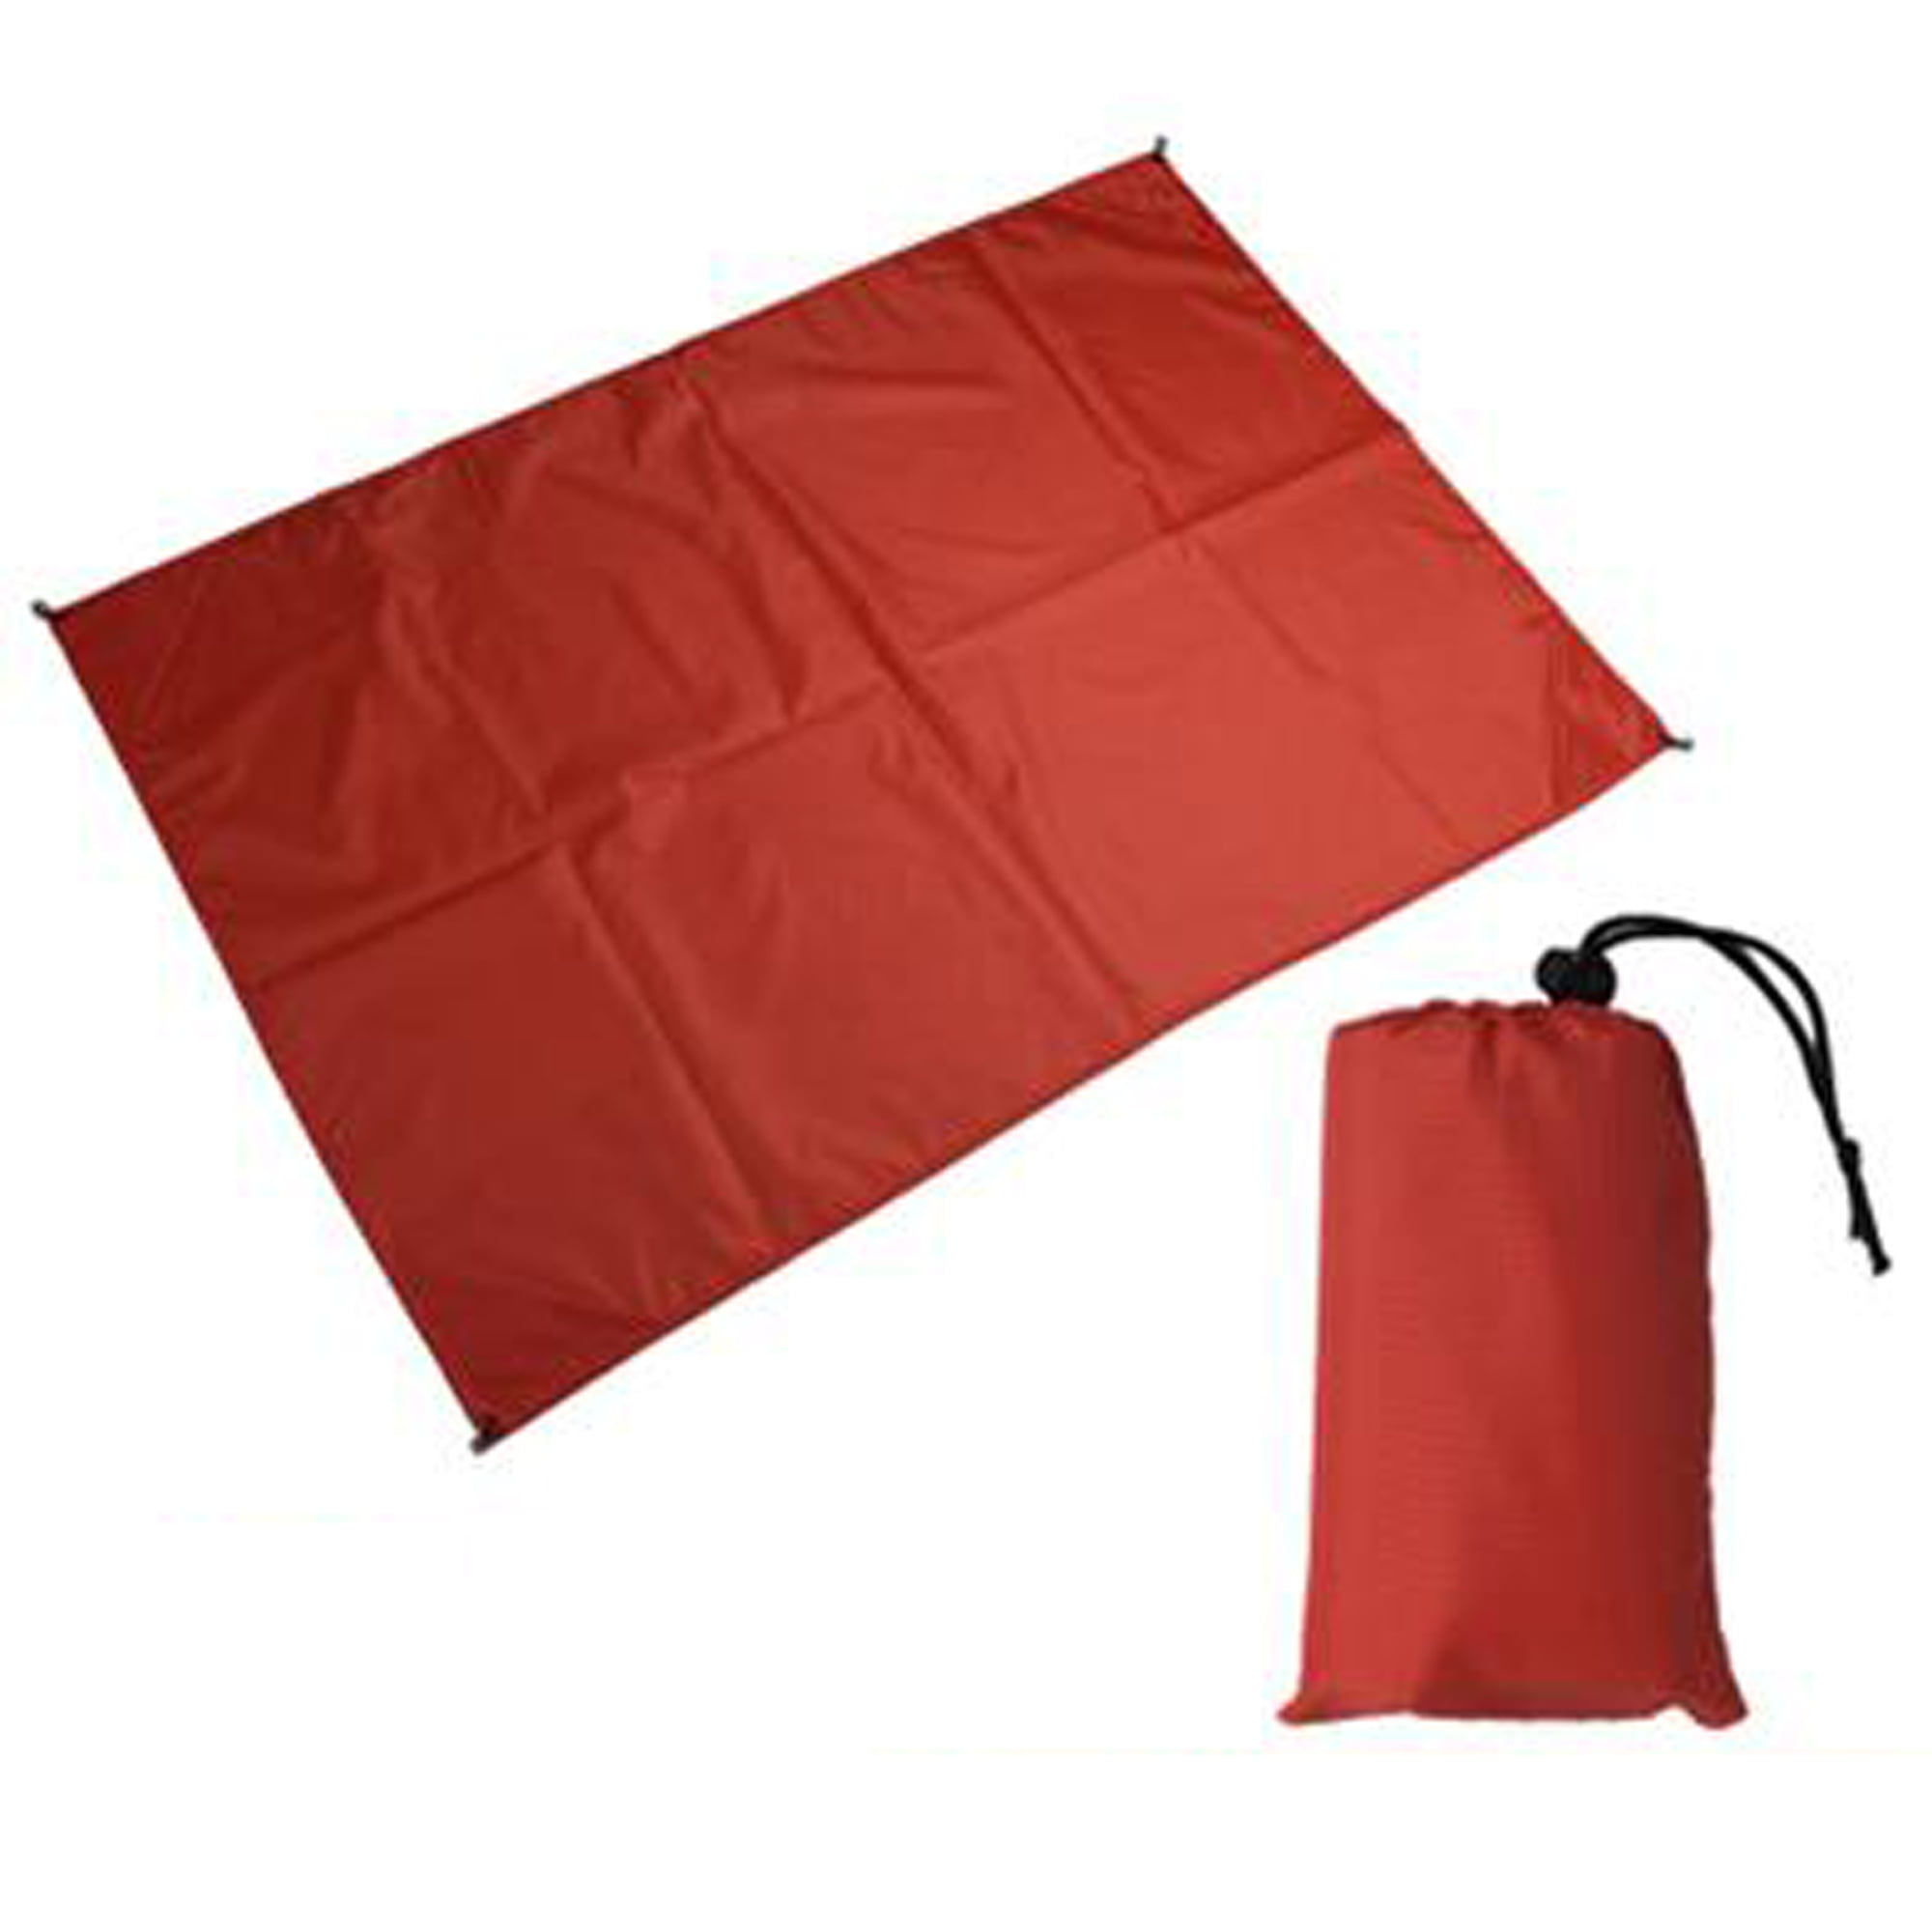 Picnic Blanket Mat 100cm  Waterproof Fleece Camping Outdoor Beach Festival Rug 